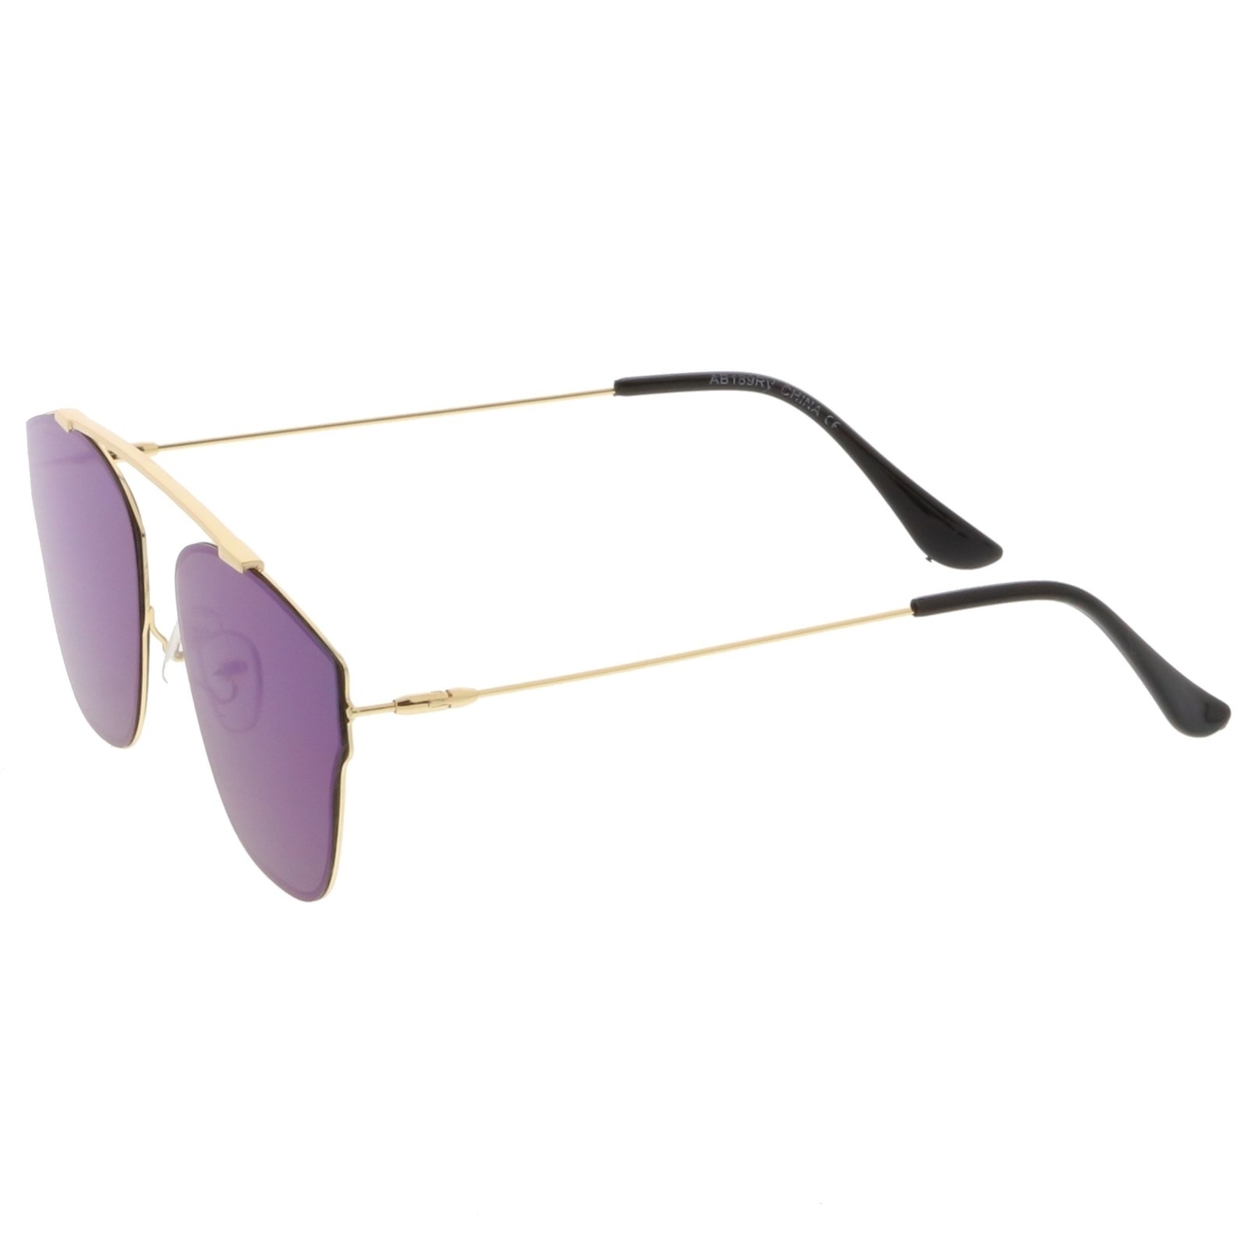 Modern Ultra Slim Metal Curved Crossbar Colored Mirror Flat Lens Pantos Sunglasses 57mm - Black / Blue Mirror